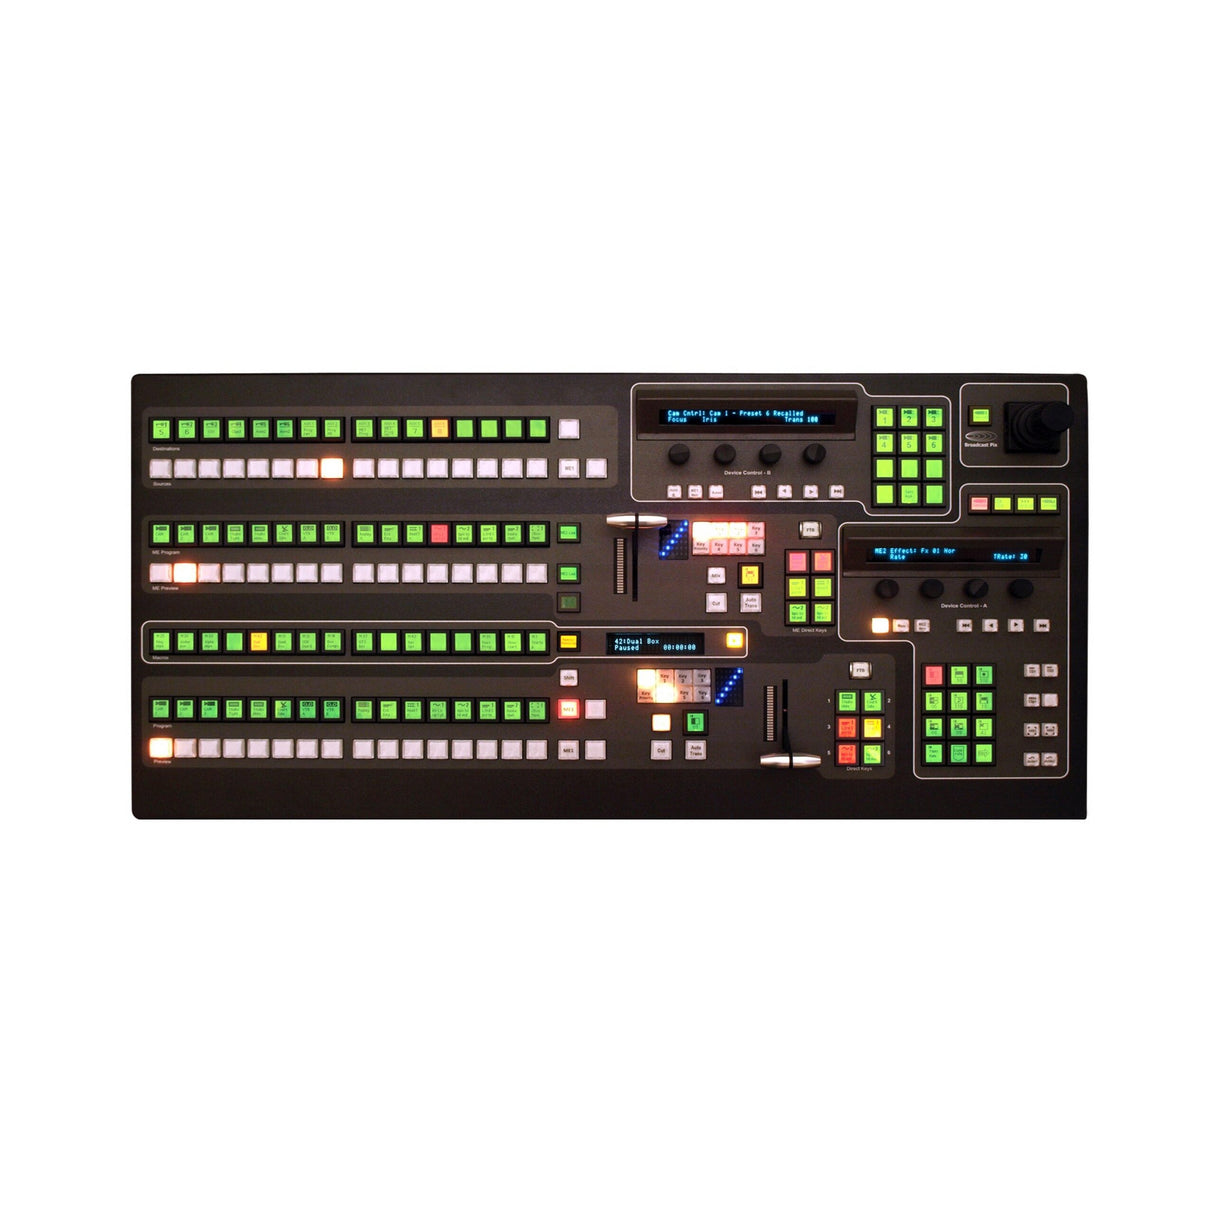 Broadcast Pix 2 M/E 5000 Control Panel fpr GX System